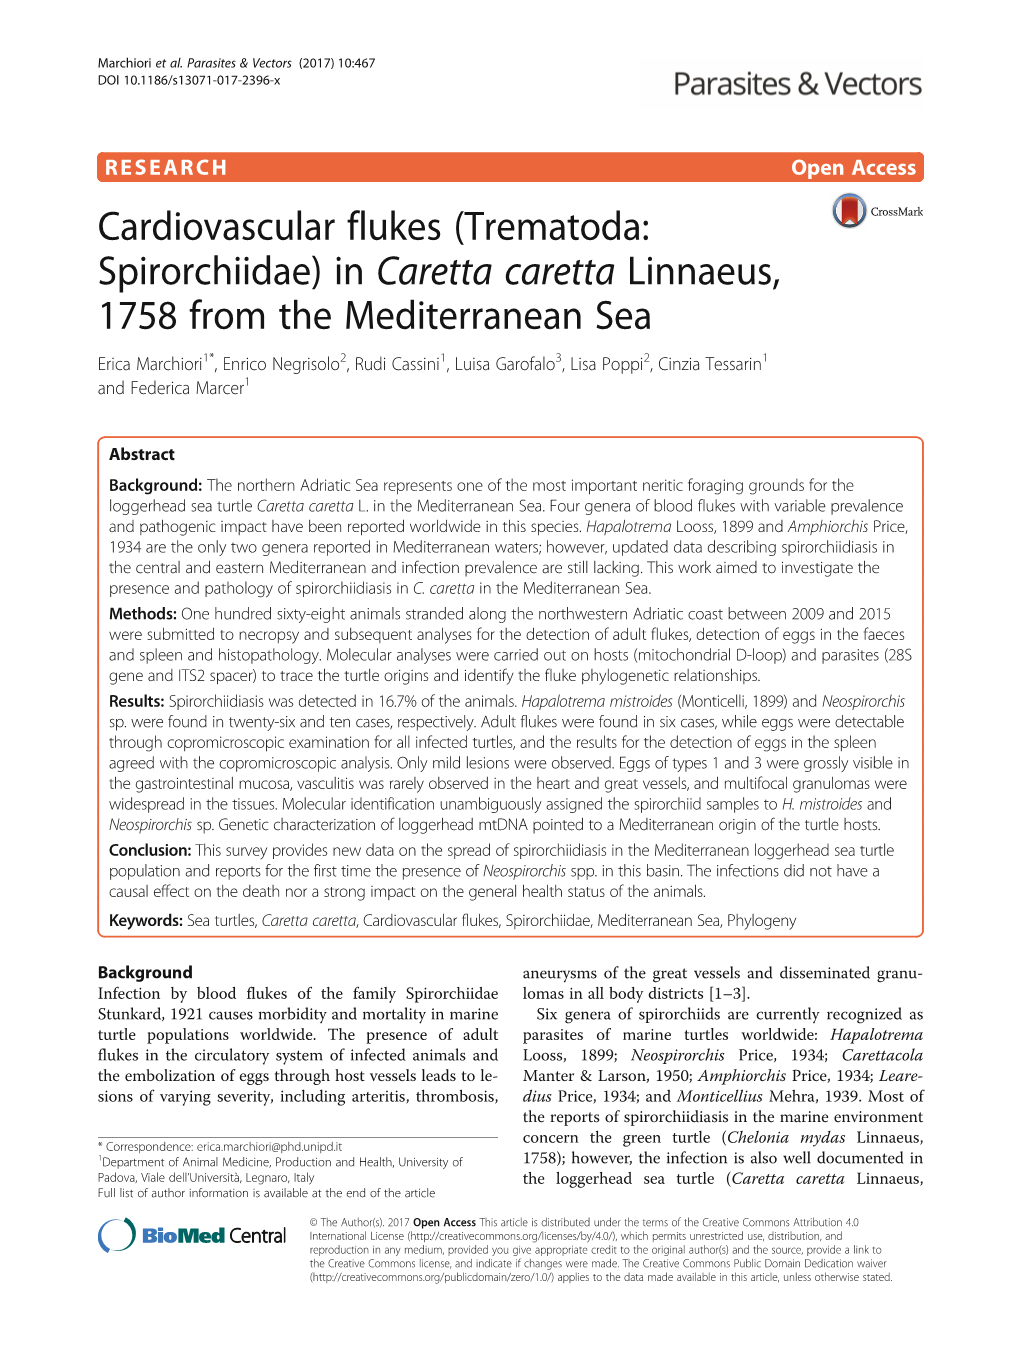 Cardiovascular Flukes (Trematoda: Spirorchiidae) in Caretta Caretta